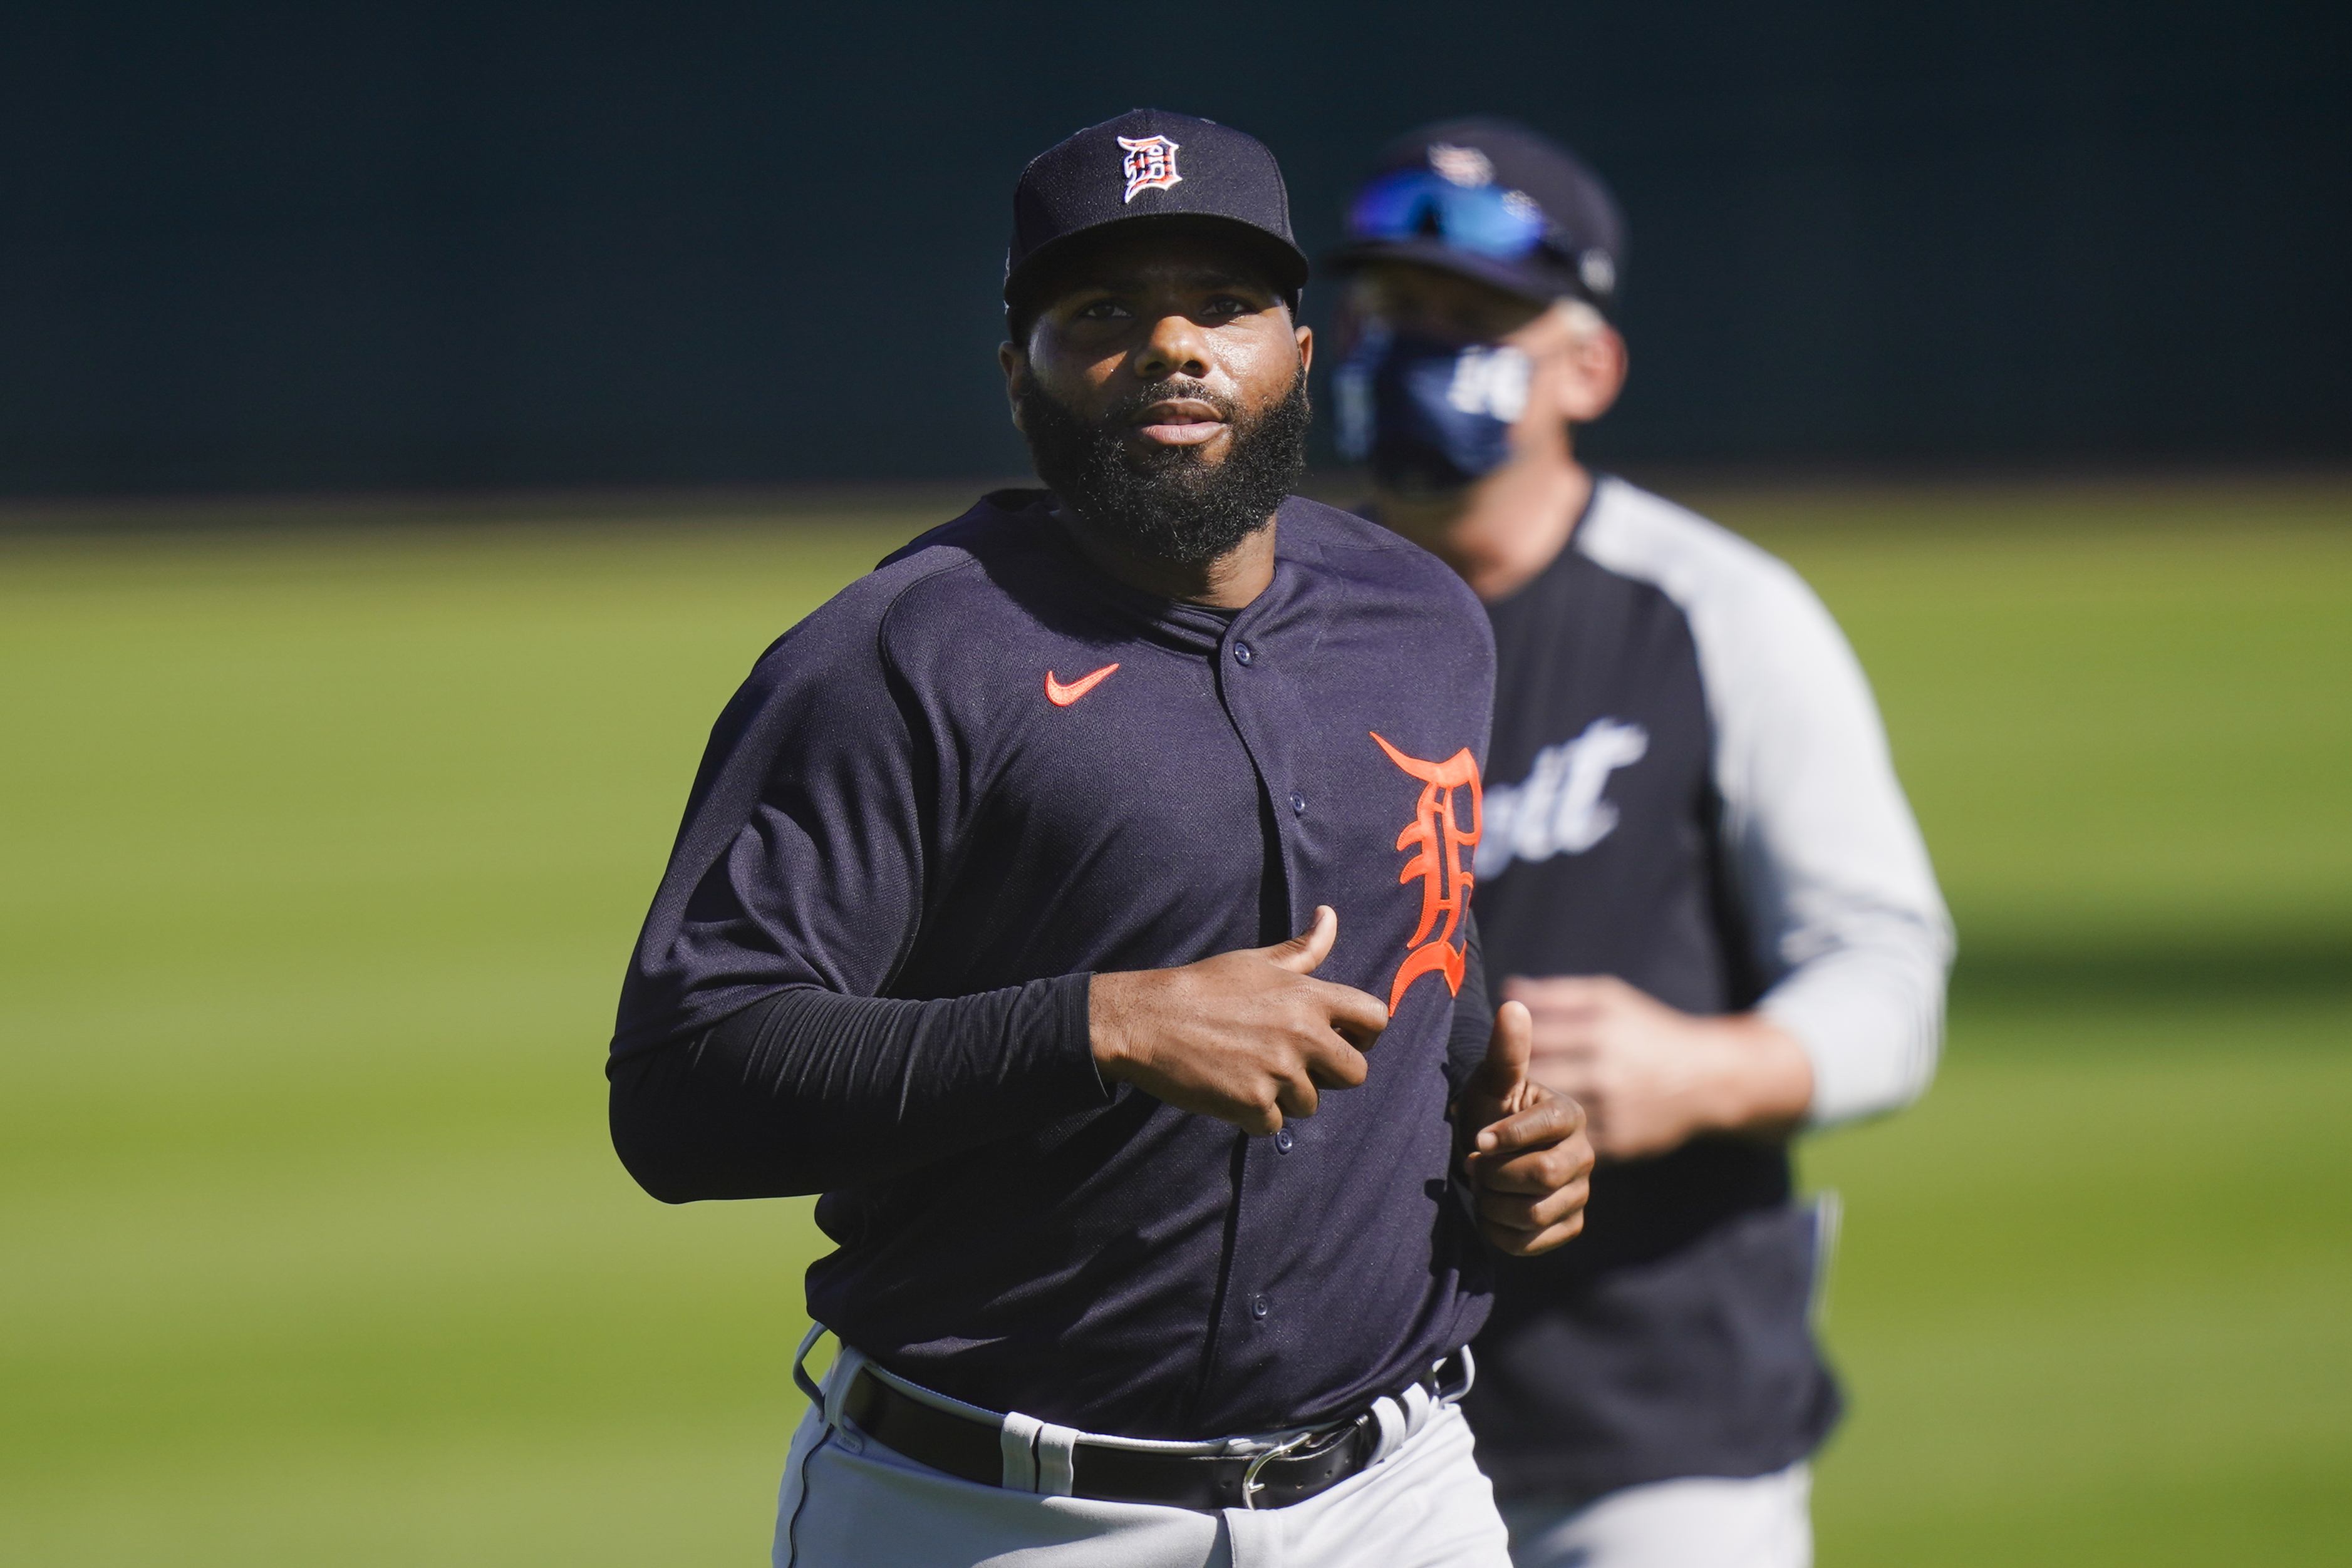 Baseball's 'Pudge' Rodriguez to visit El Paso